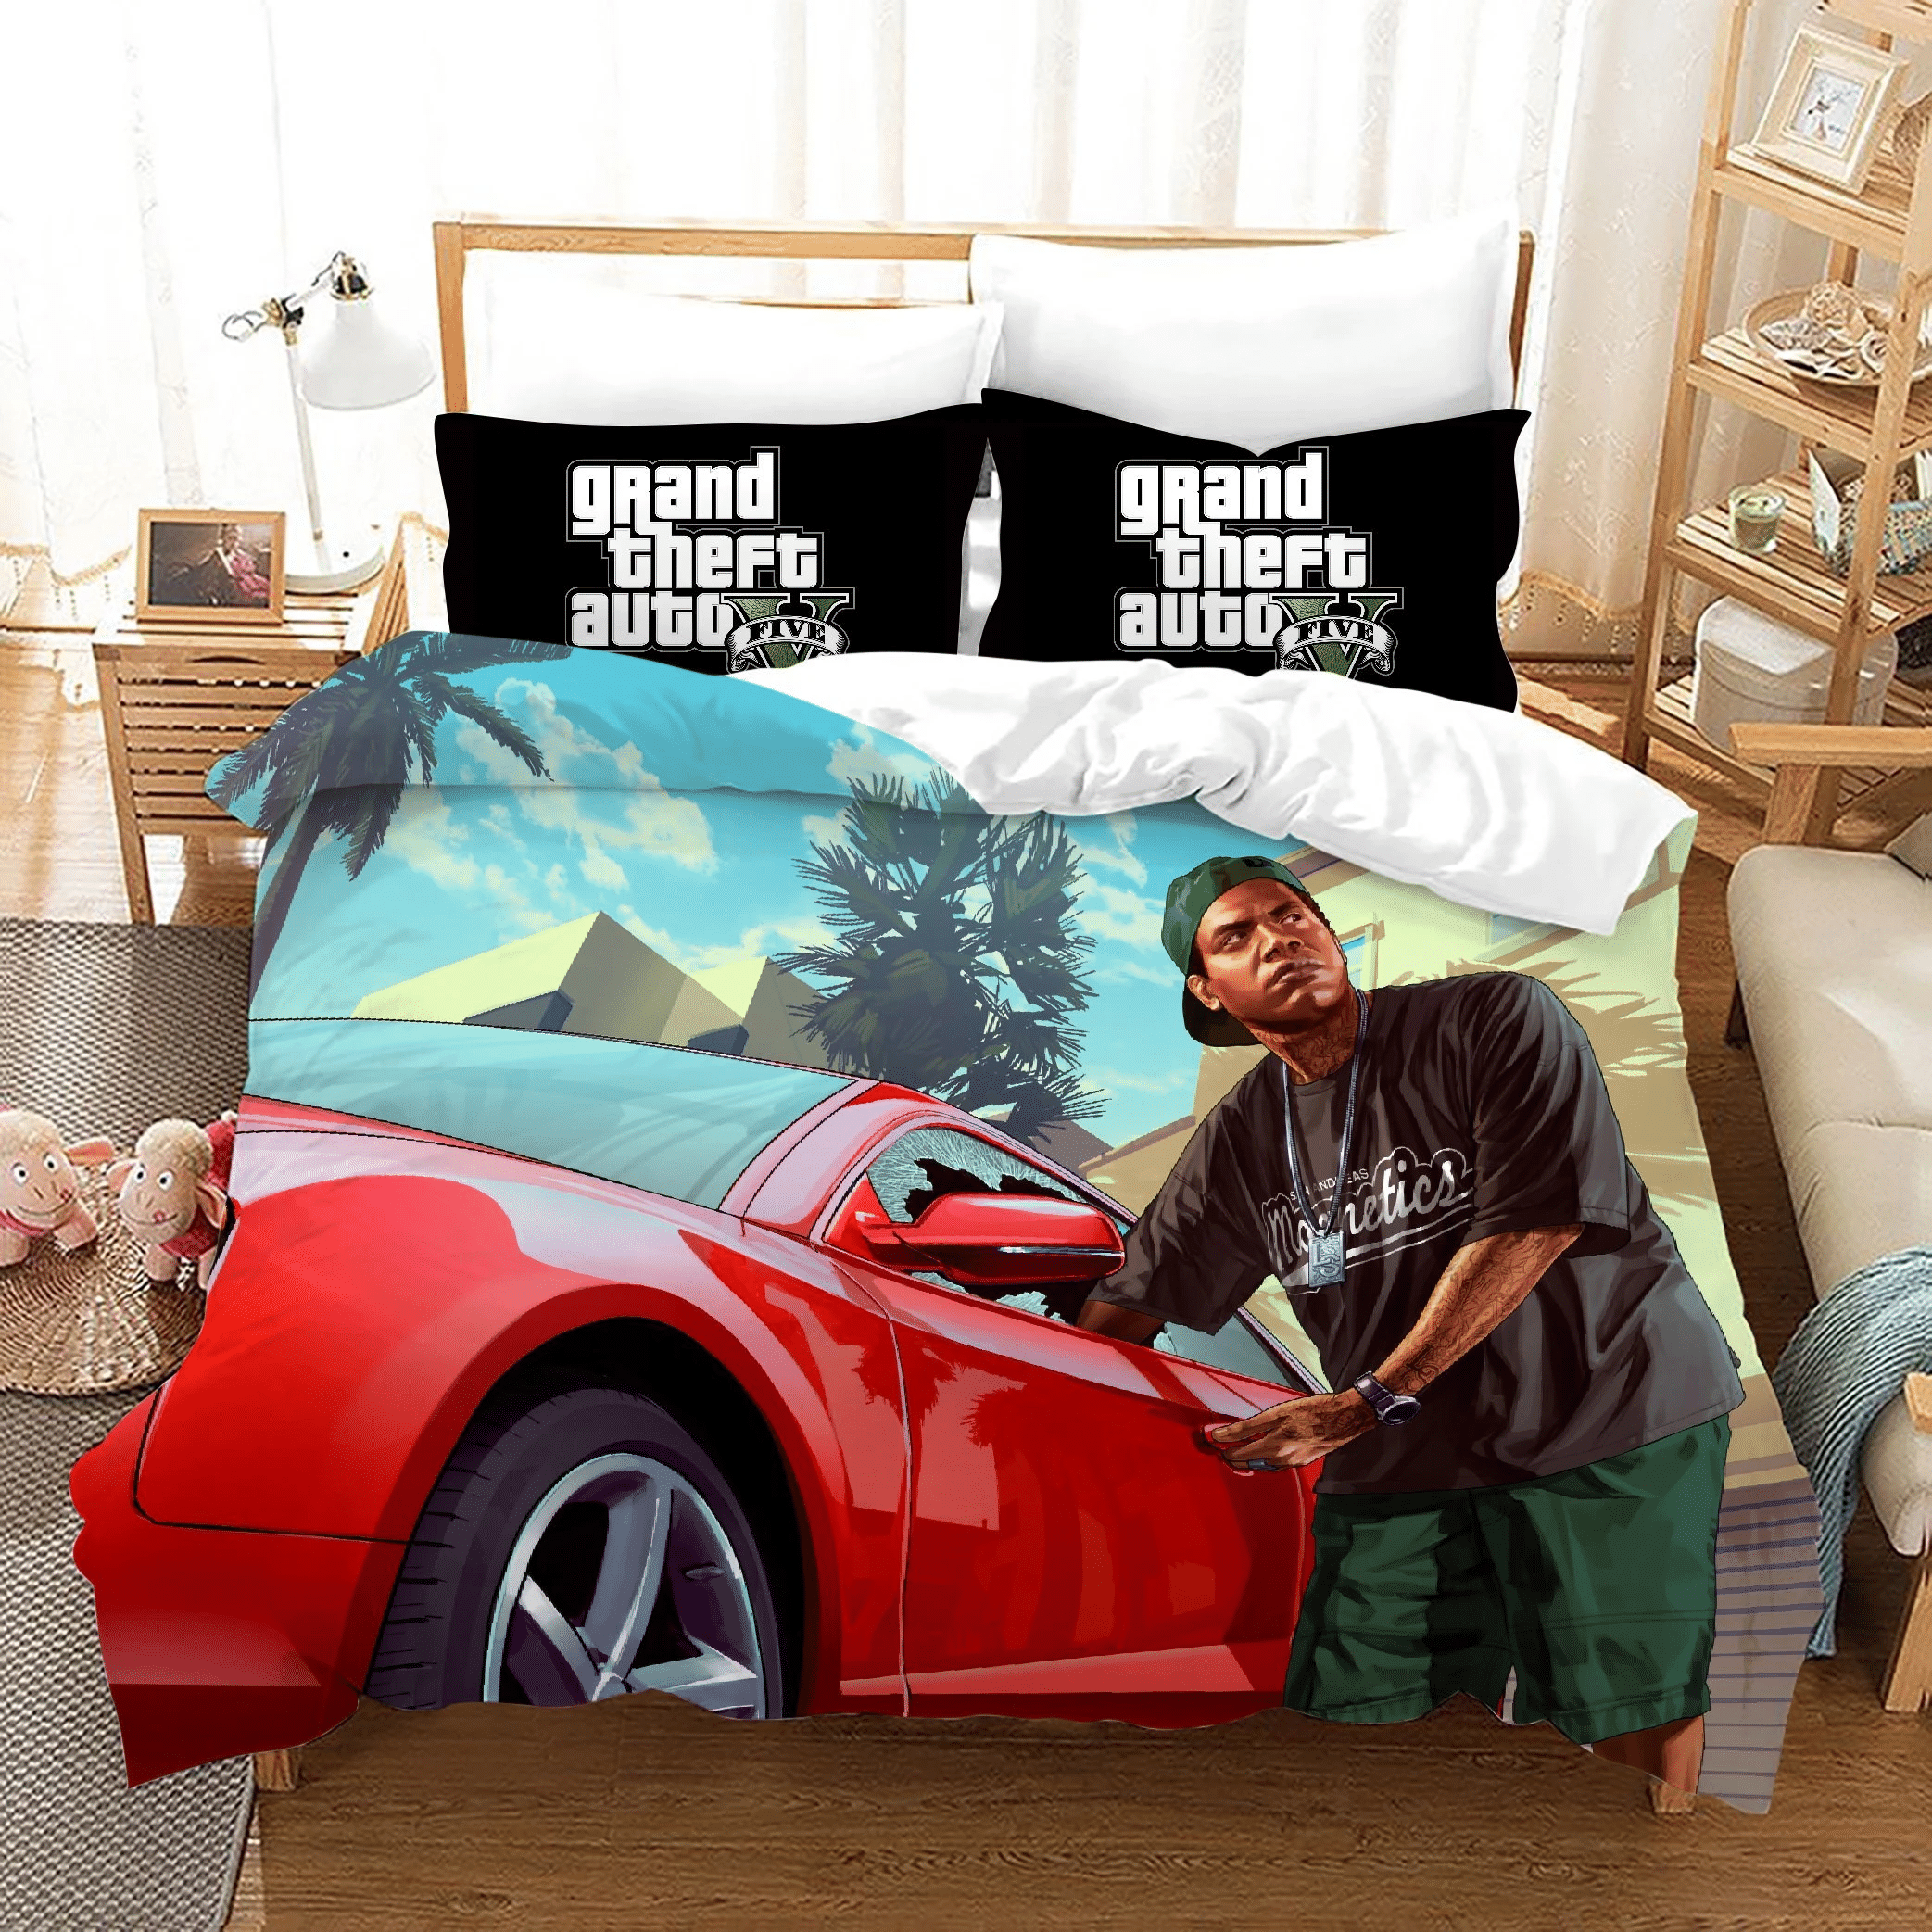 Grand Theft Auto 14 Duvet Cover Pillowcase Bedding Sets Home